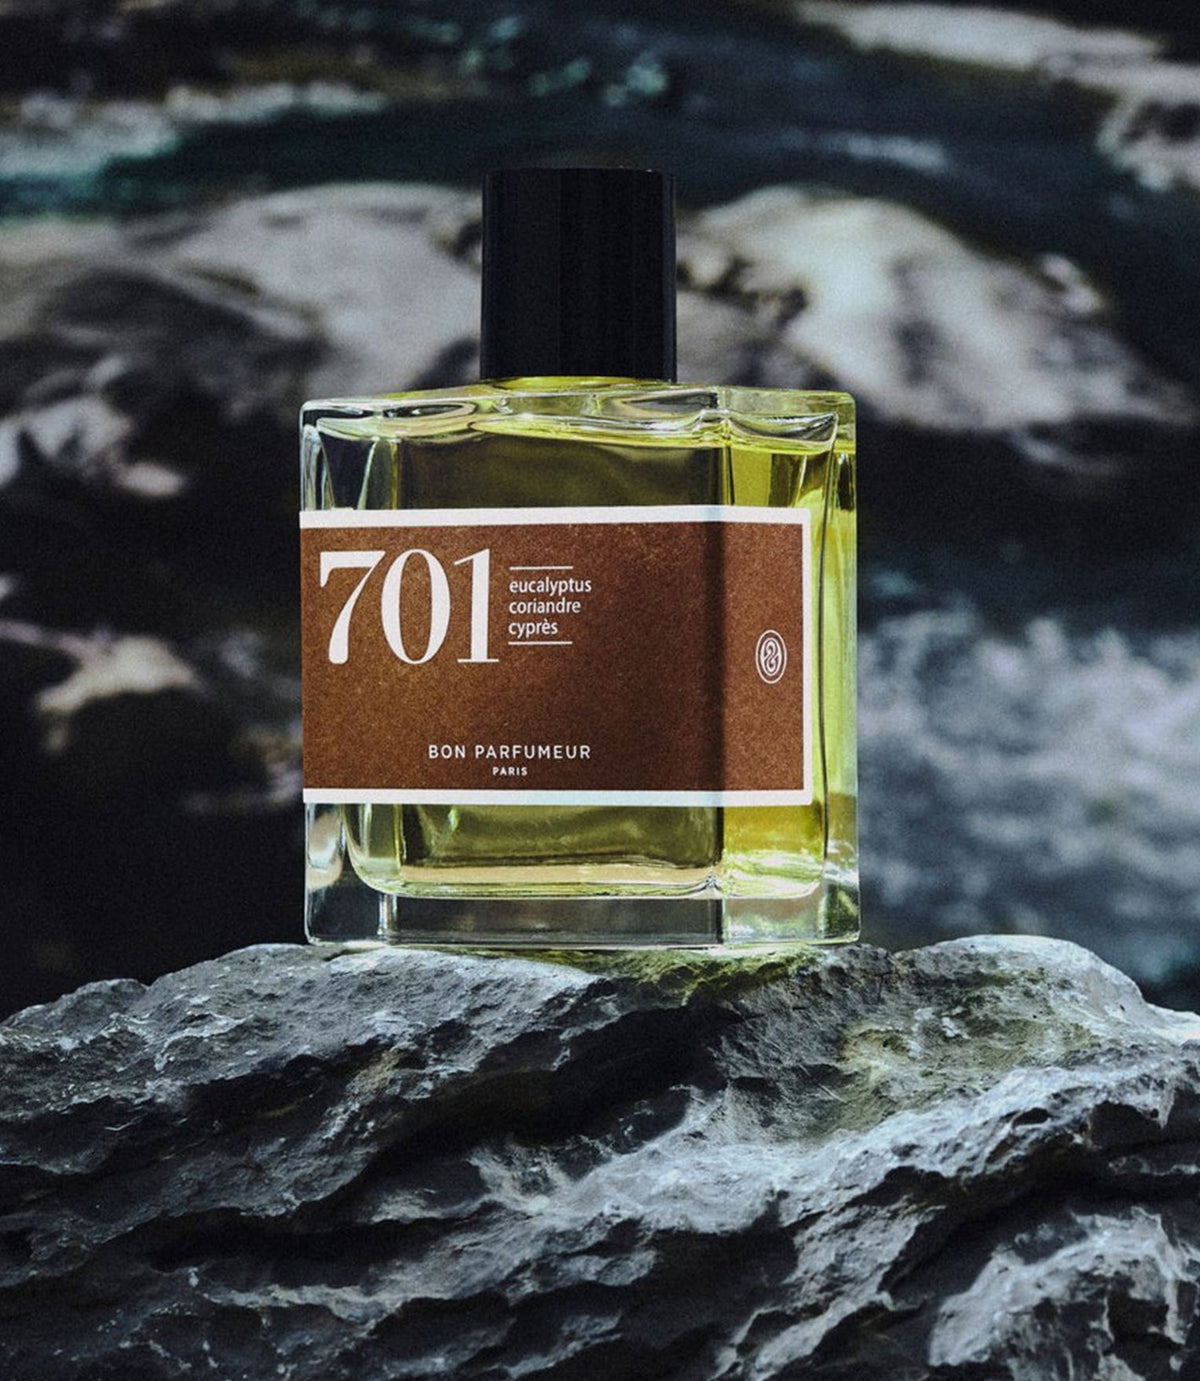 Eau de Parfum 701 Aromatic: Eucalyptus, Coriander and Cypress 30ml